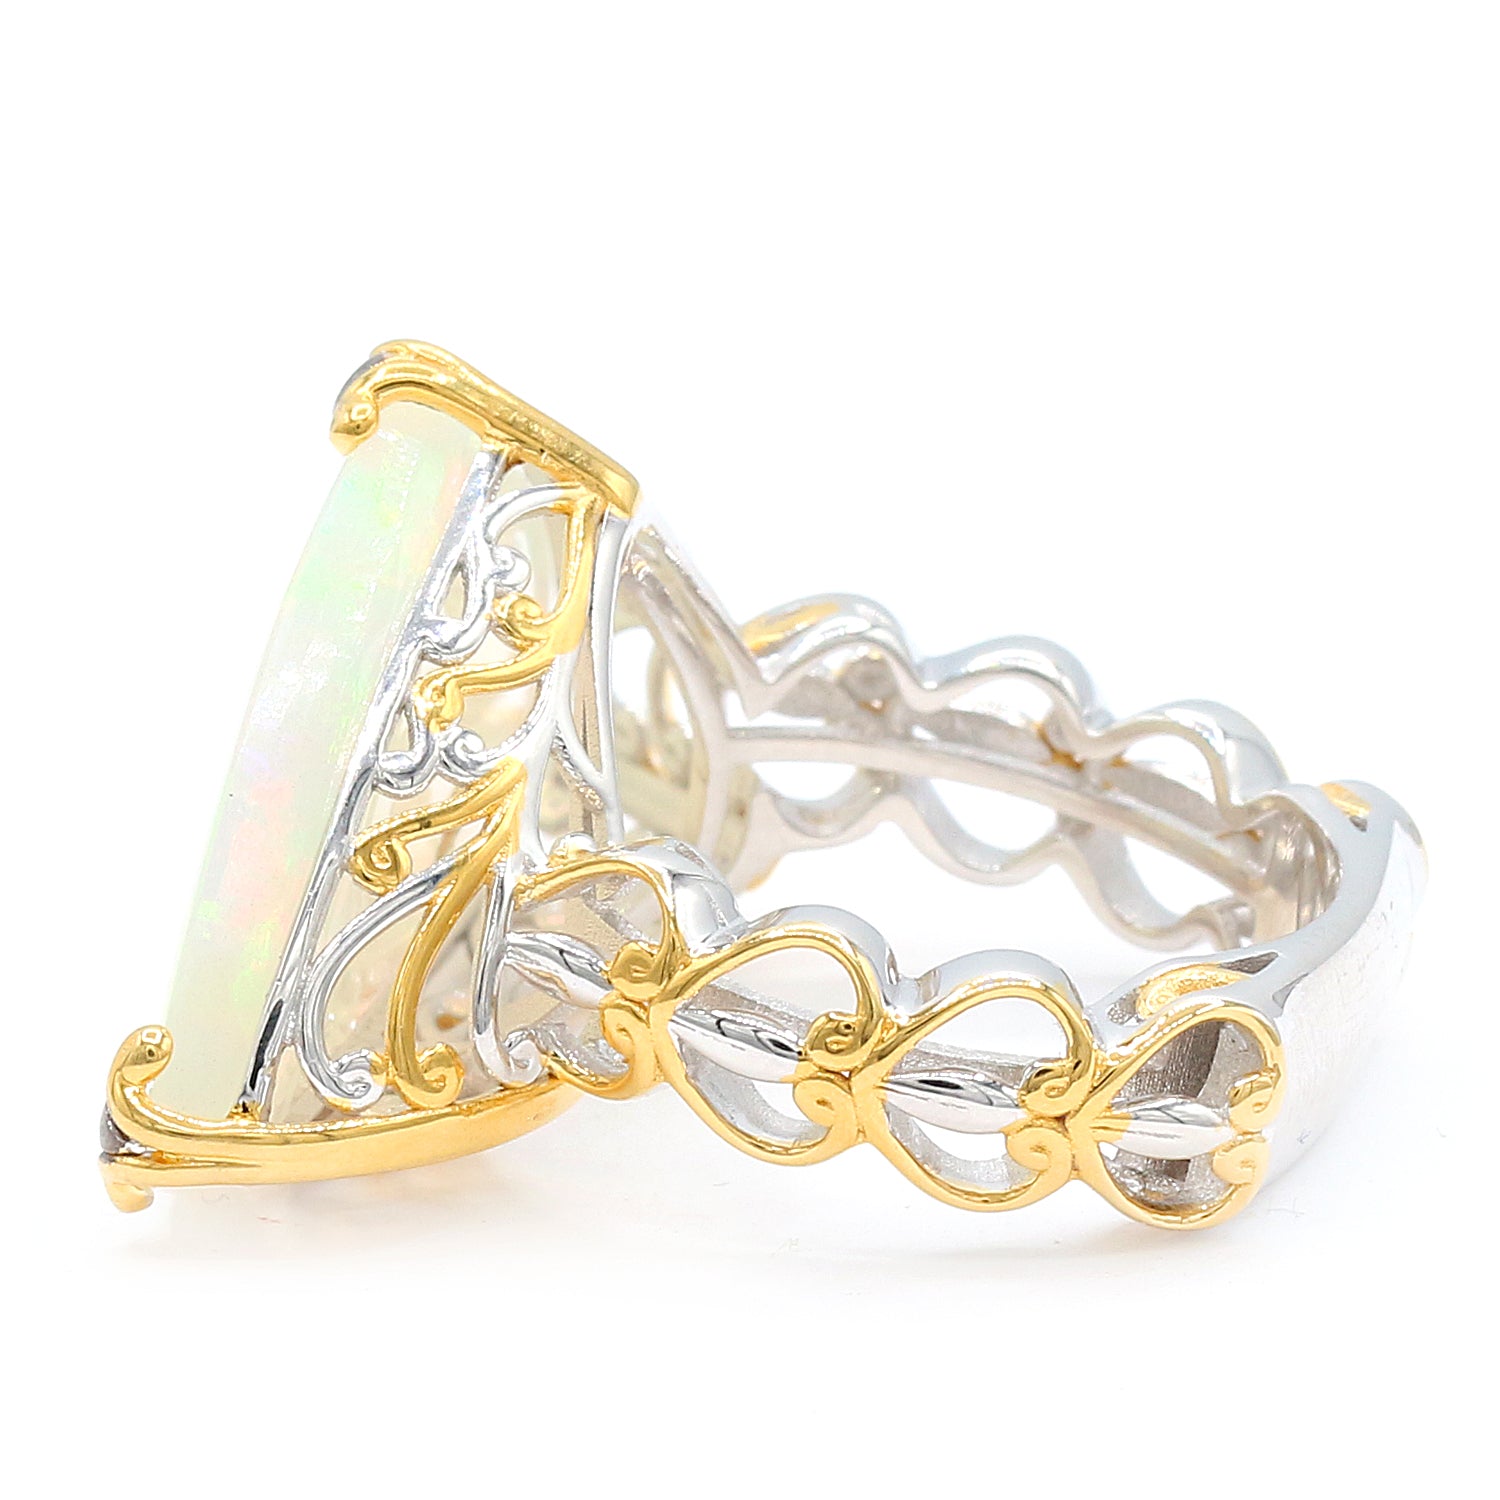 Limited Edition Gems en Vogue One-of-a-Kind 10.73ctw Trillion Ethiopian Opal Ring